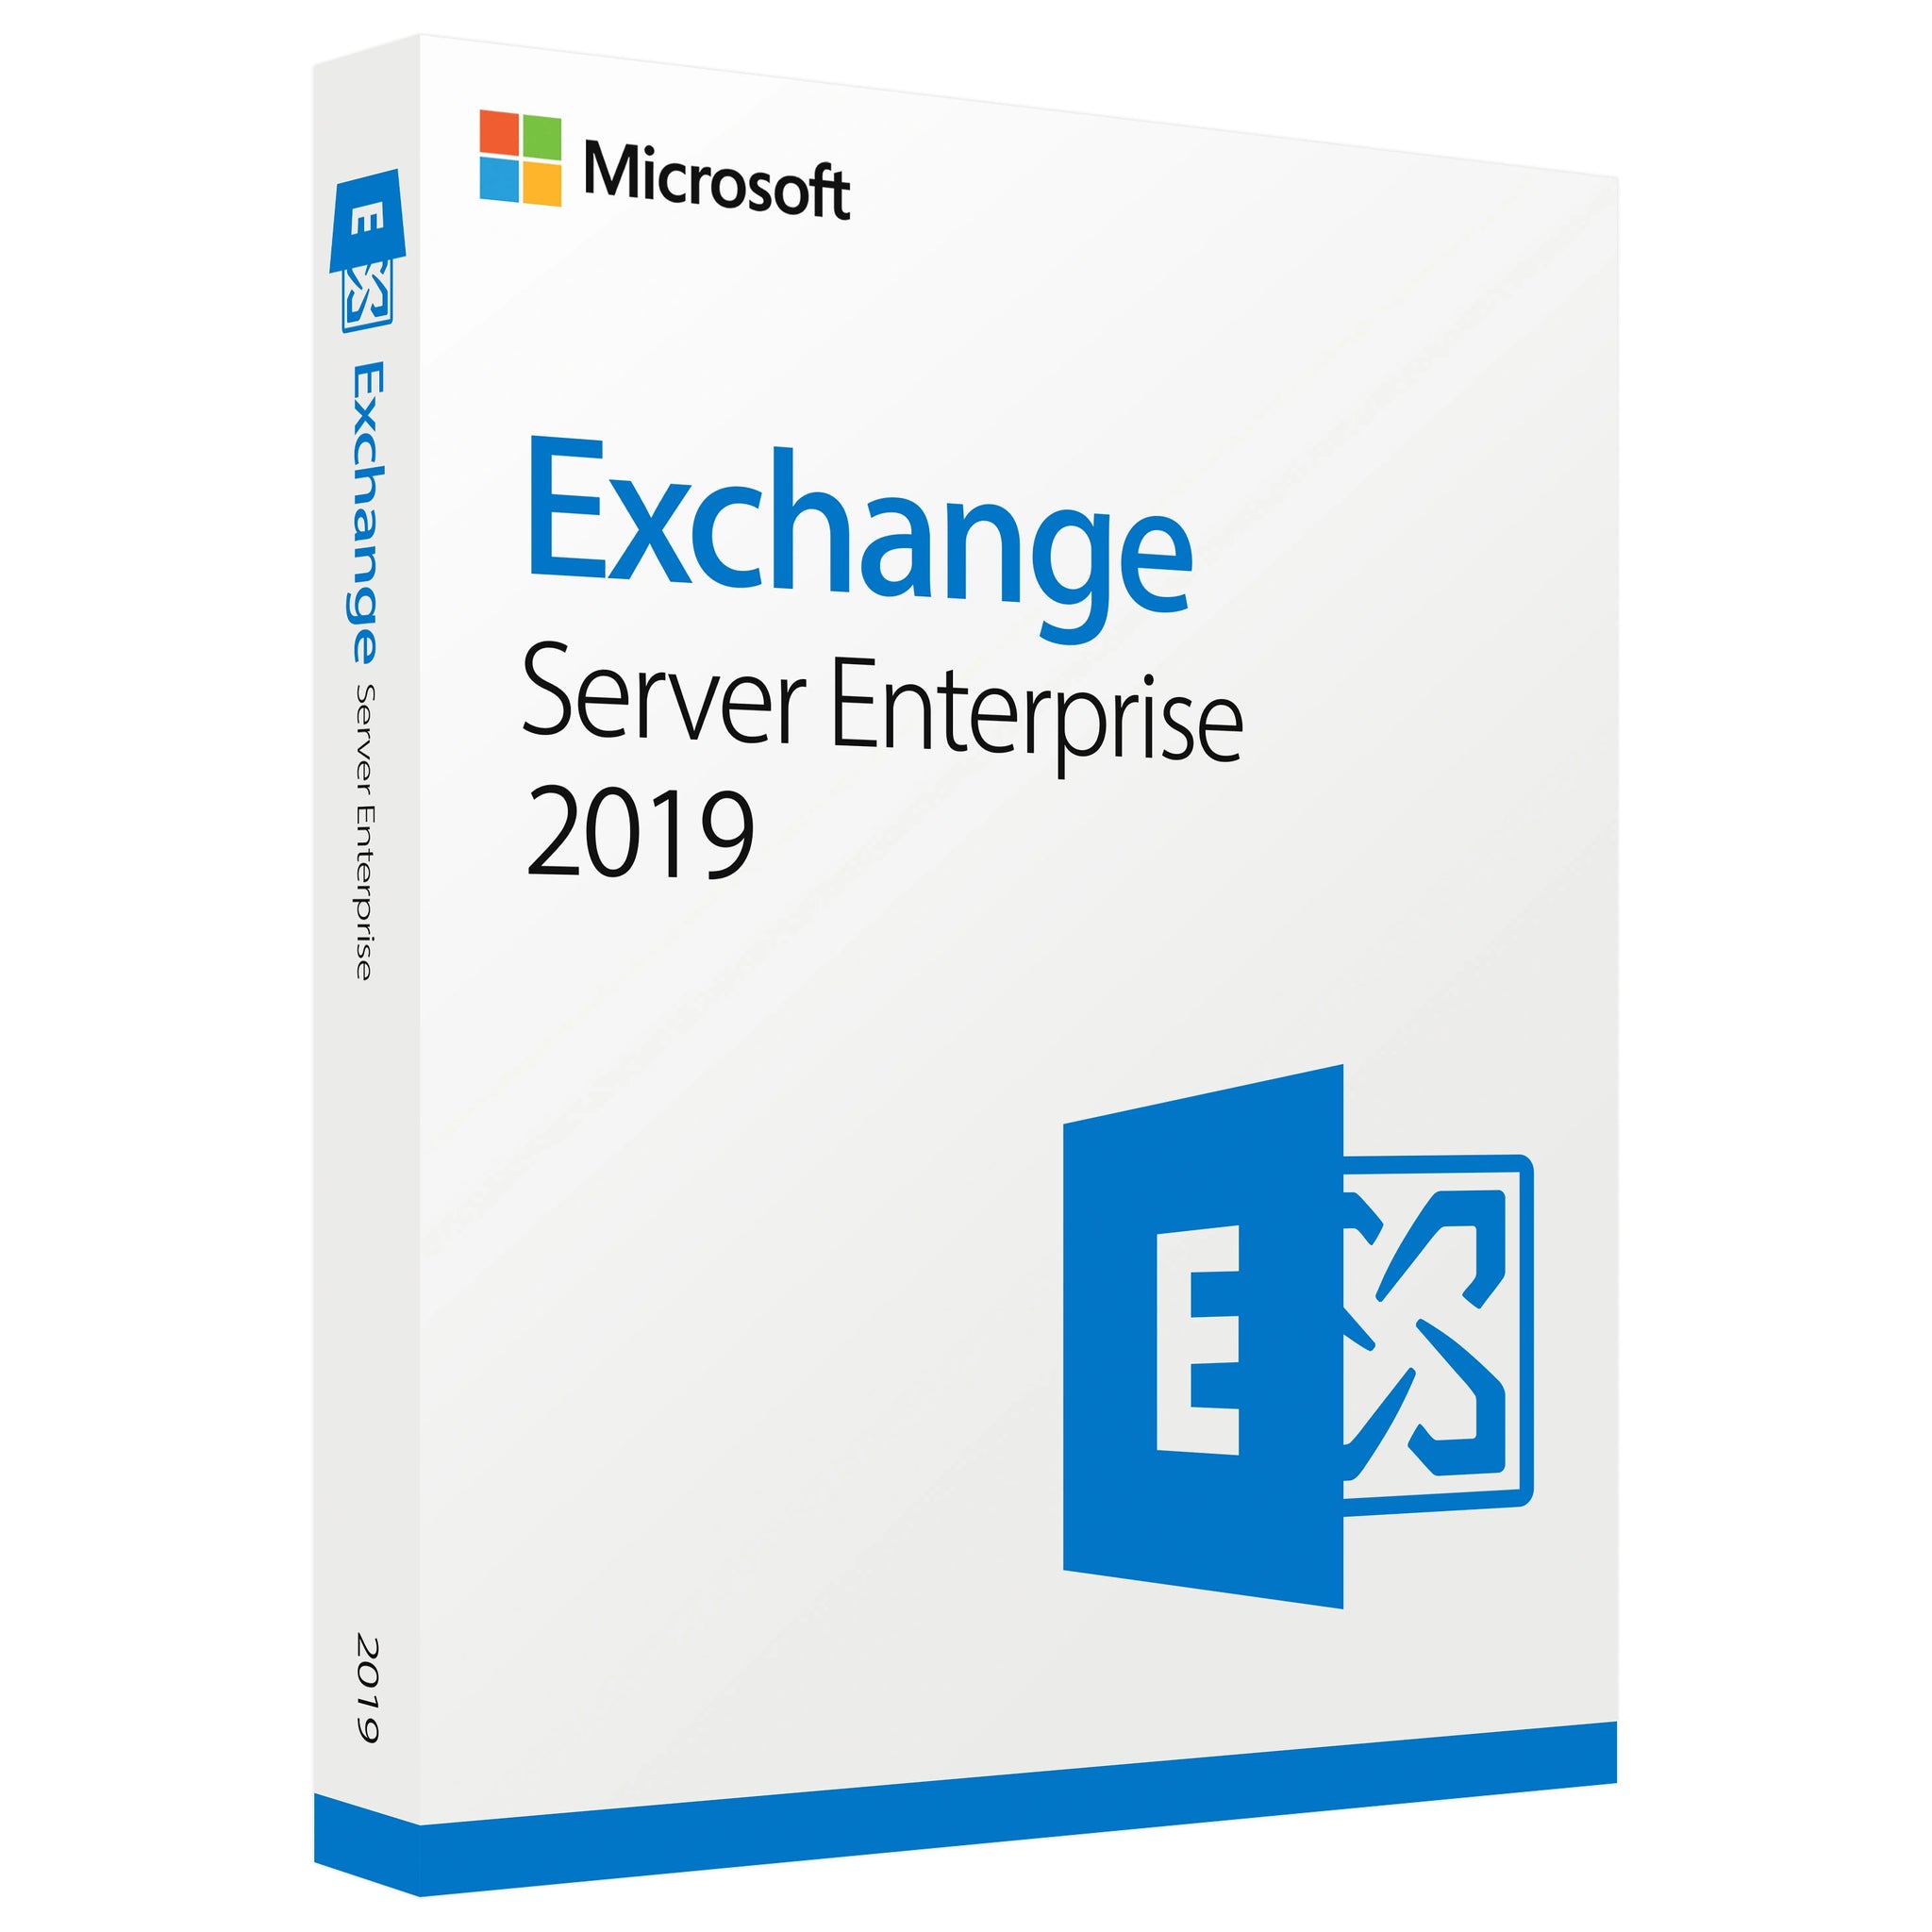 Microsoft Exchange Server 2019 Enterprise - Lifetime License Key for 1 PC